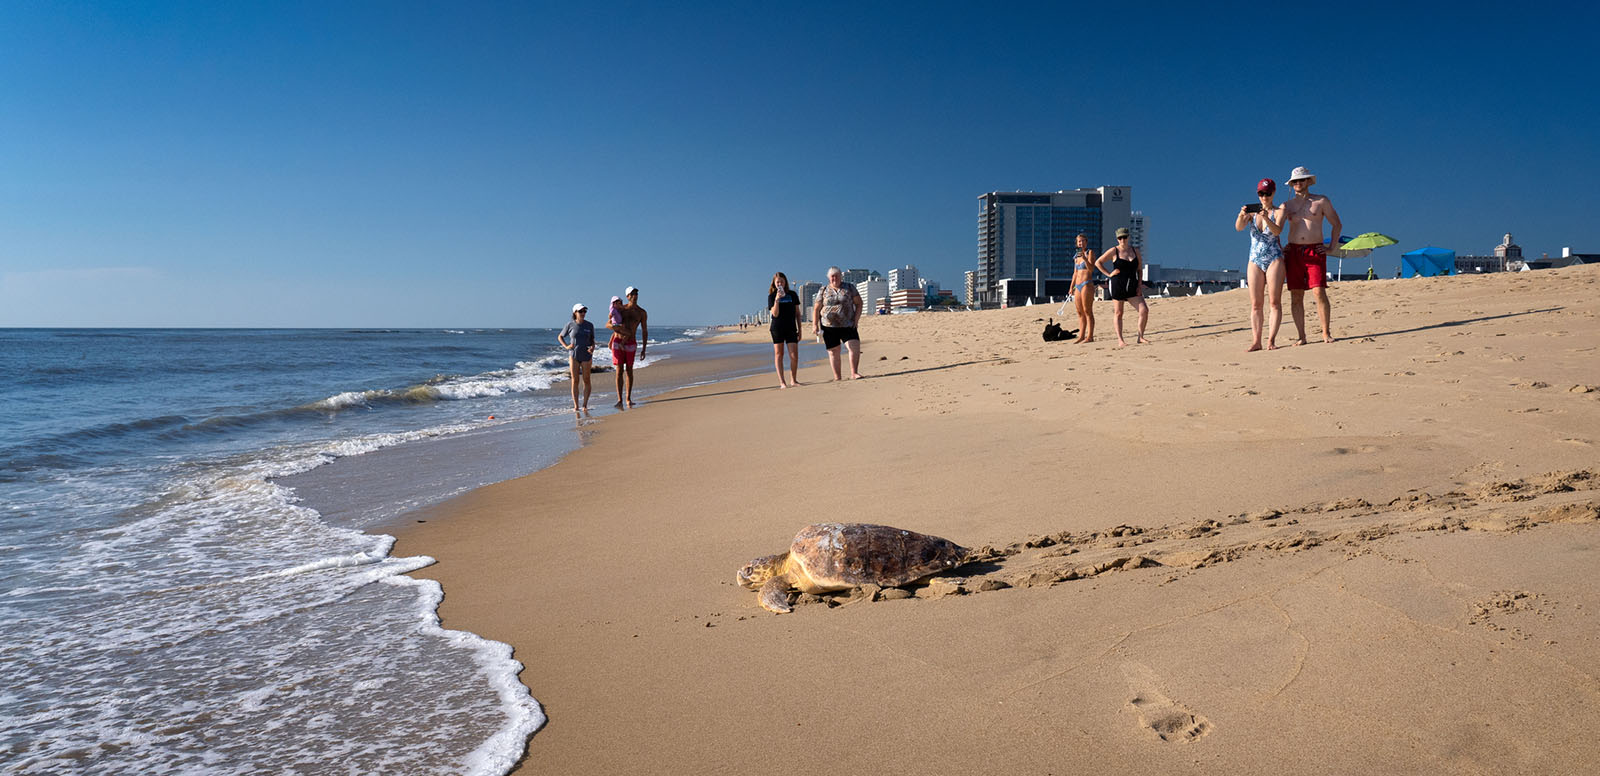 A loggerhead turtle navigates back to the ocean among beachgoers.